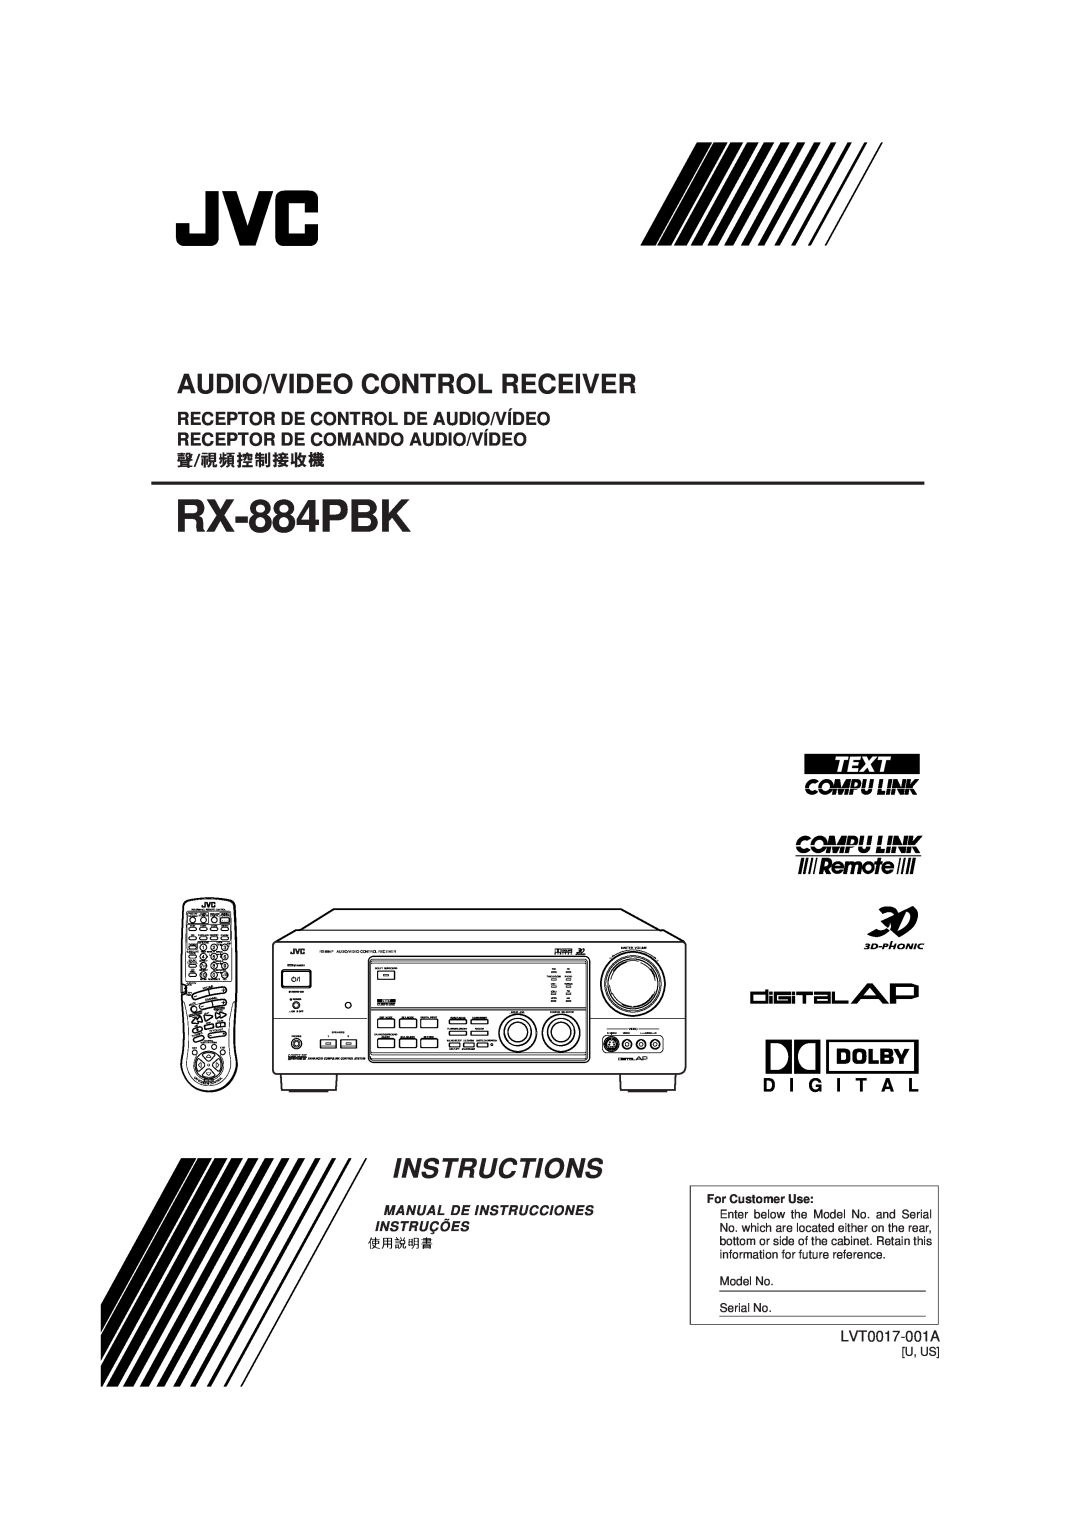 JVC RX-884PBK manual Audio/Video Control Receiver, Instructions, D I G I T A L, LVT0017-001A, For Customer Use 